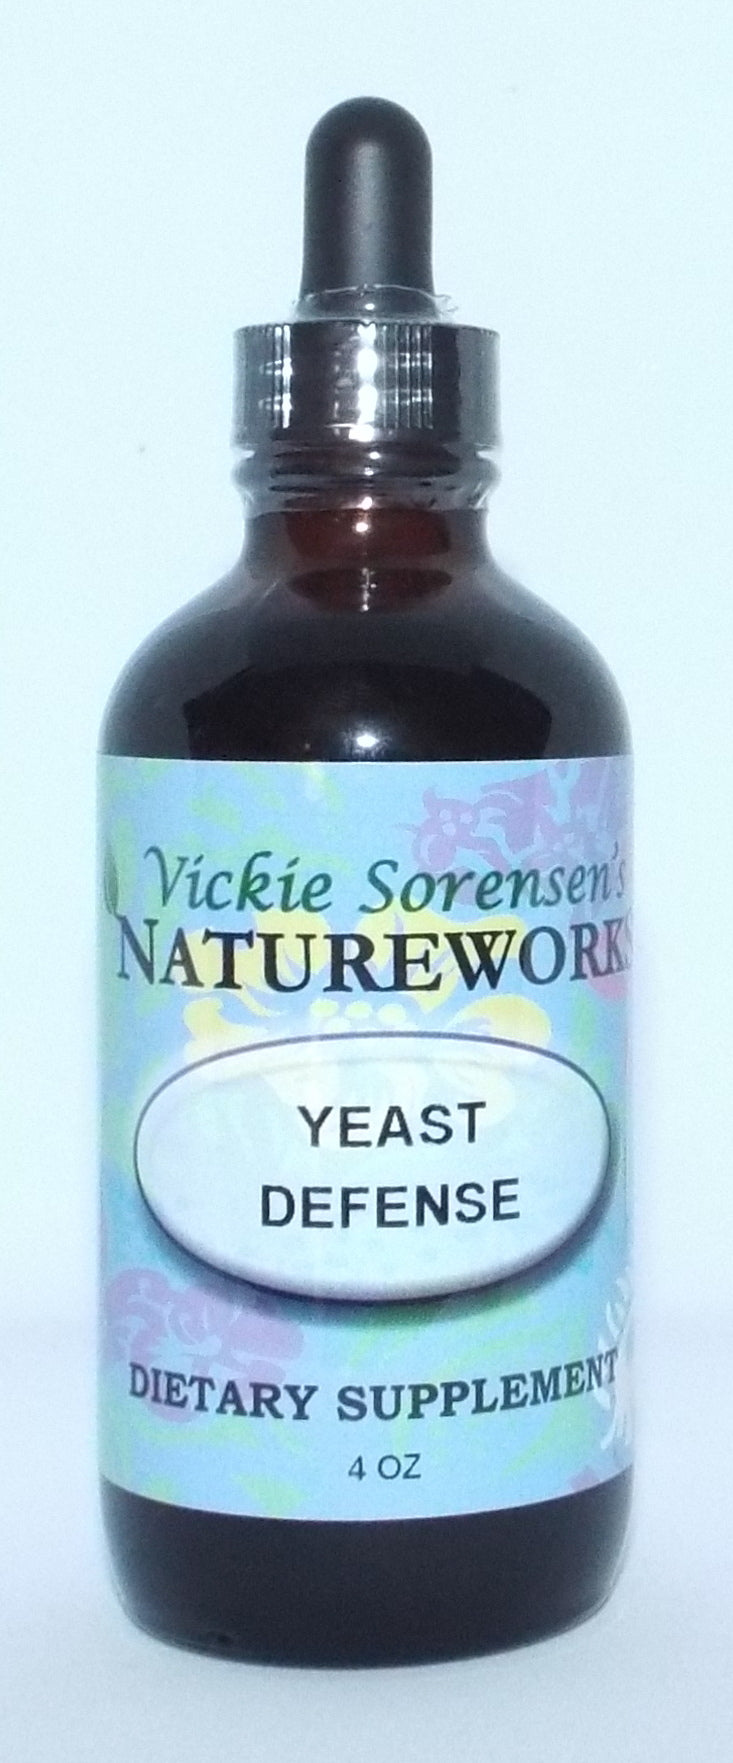 Yeast Defense